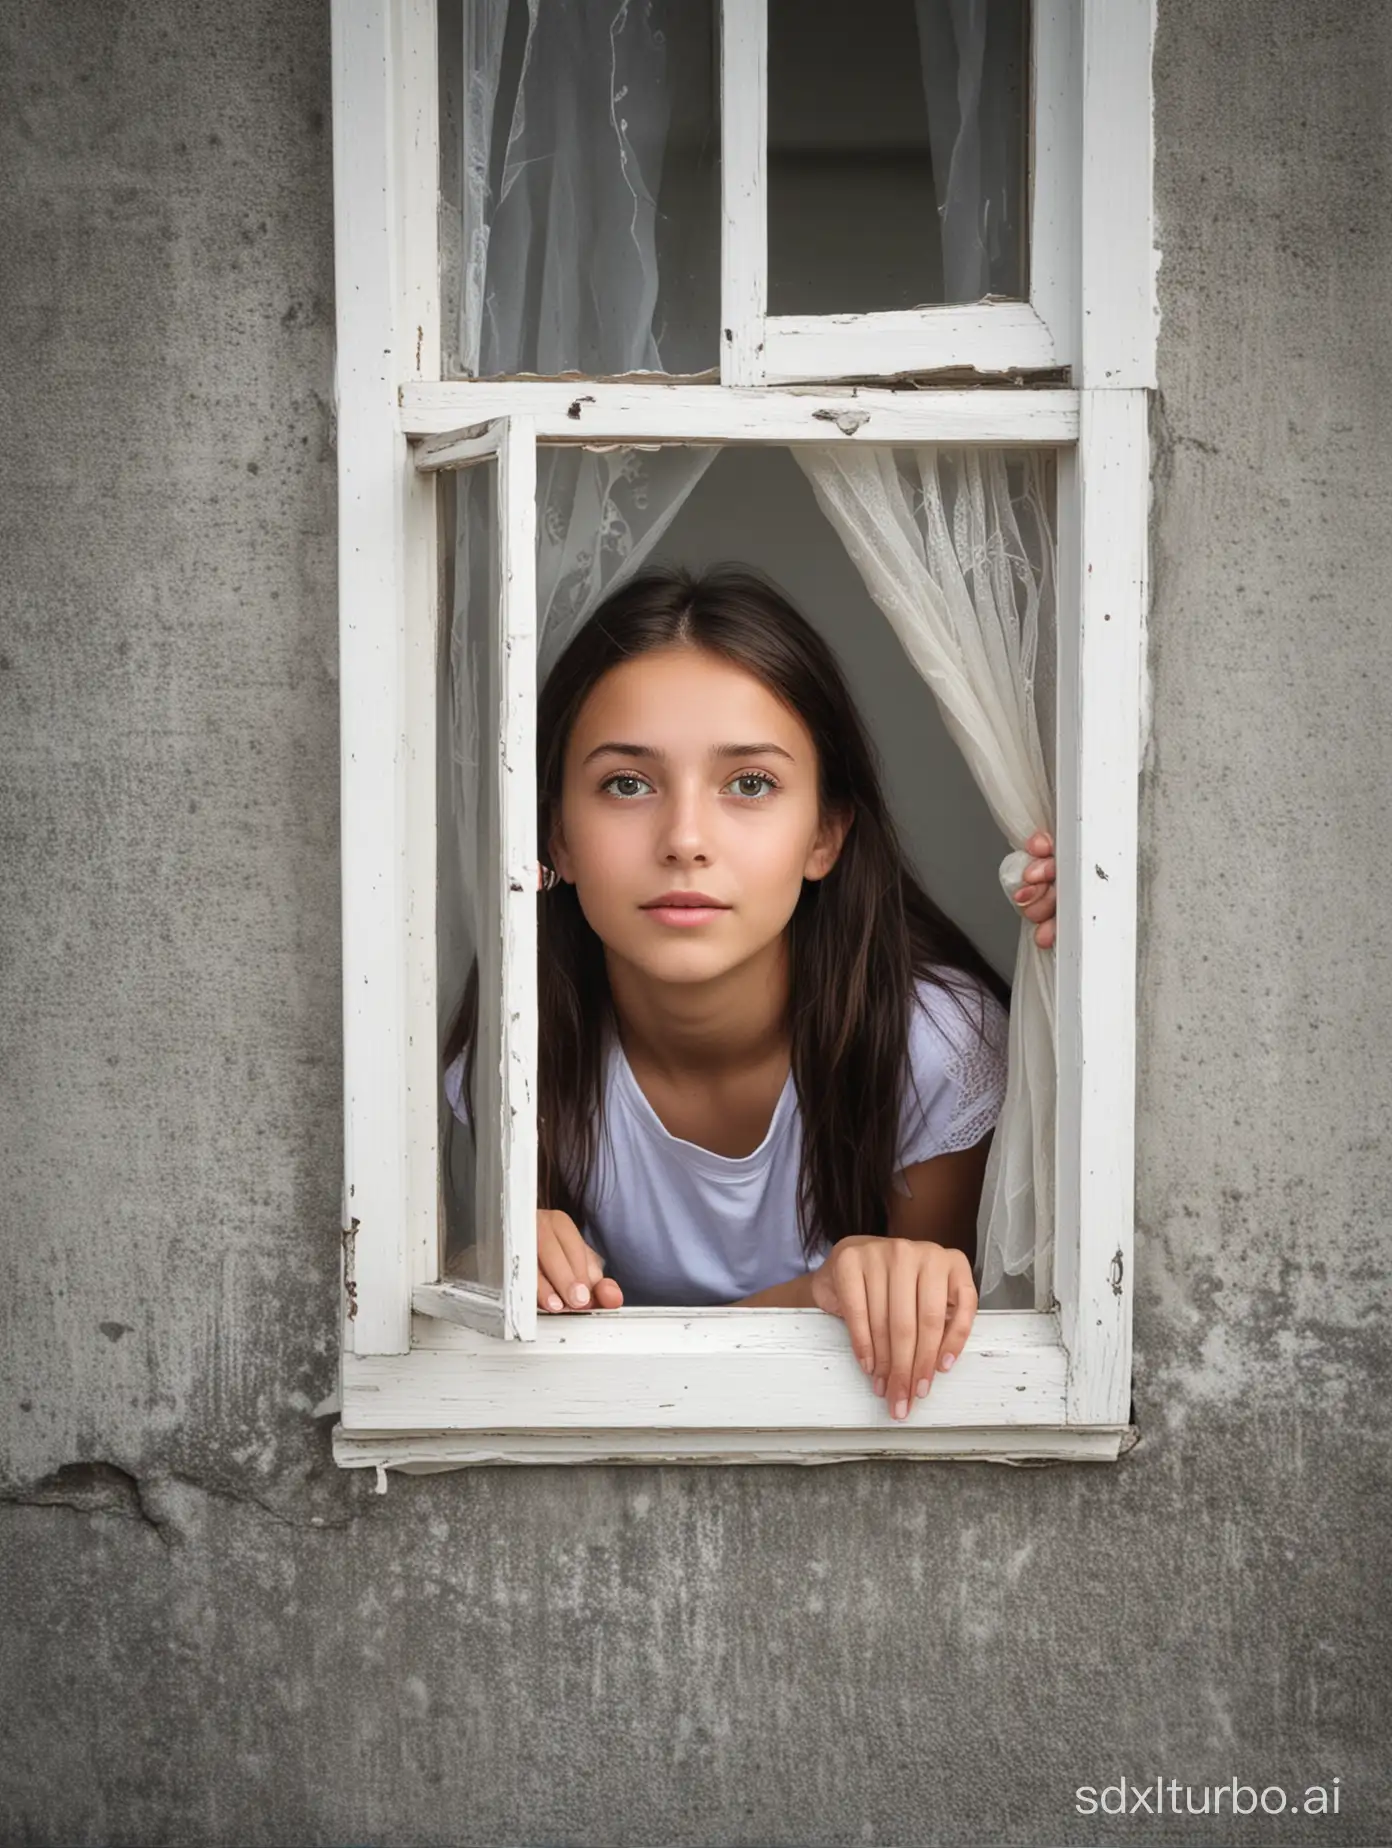 Curious-Girl-Peering-Through-Window